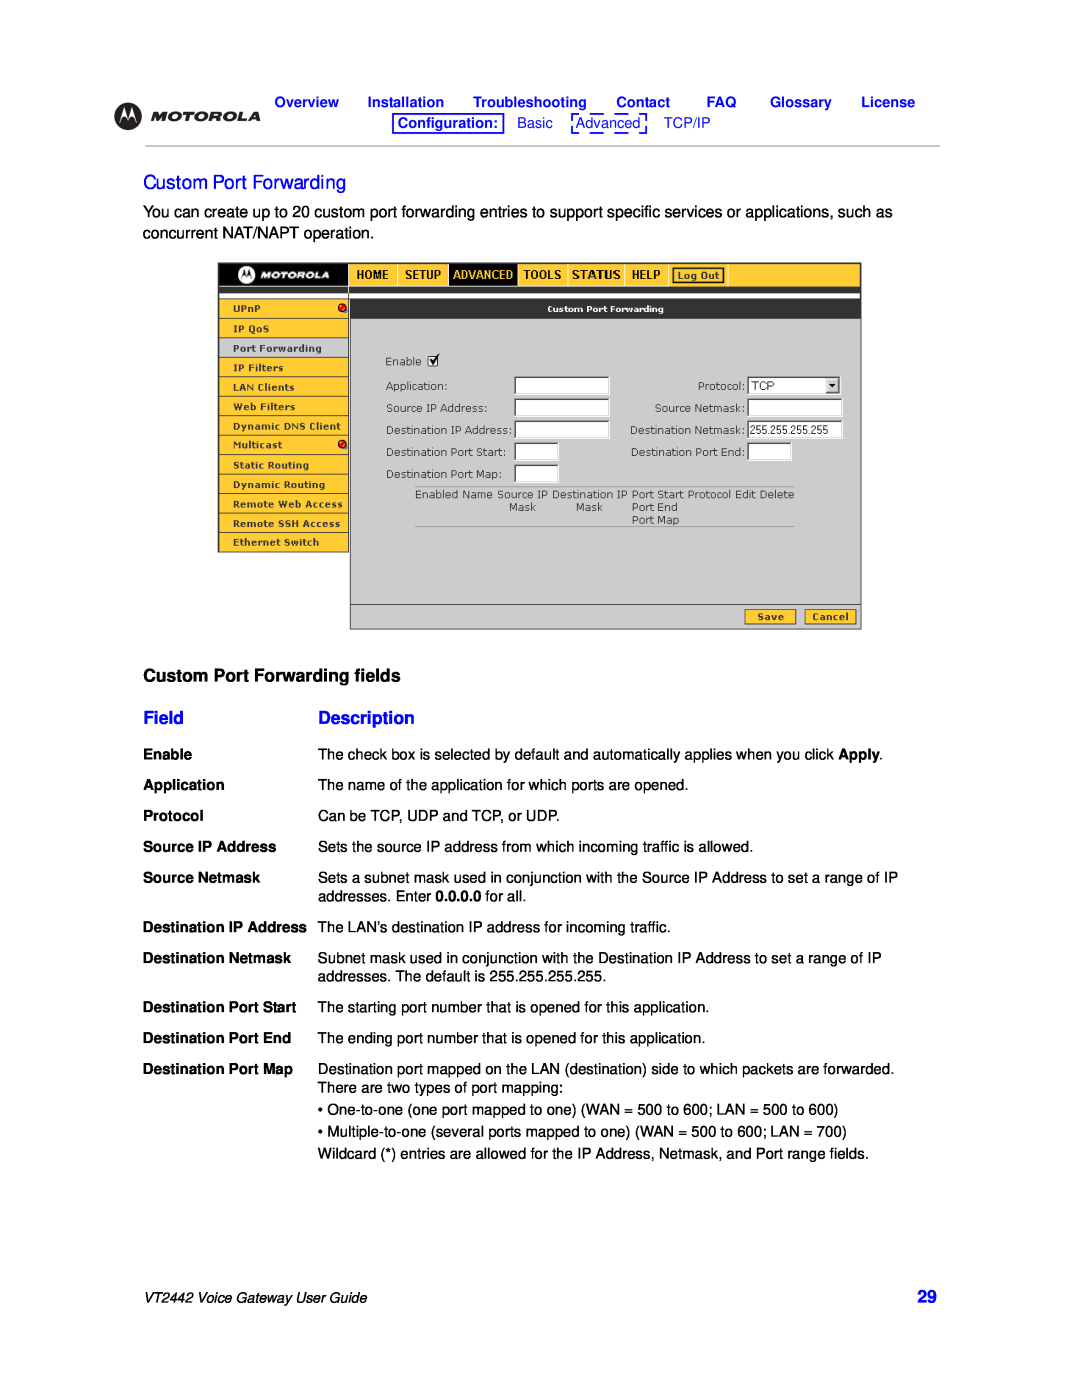 Motorola VT2442 Custom Port Forwarding fields, Field, Description, Overview, Installation, Contact, Glossary, License 